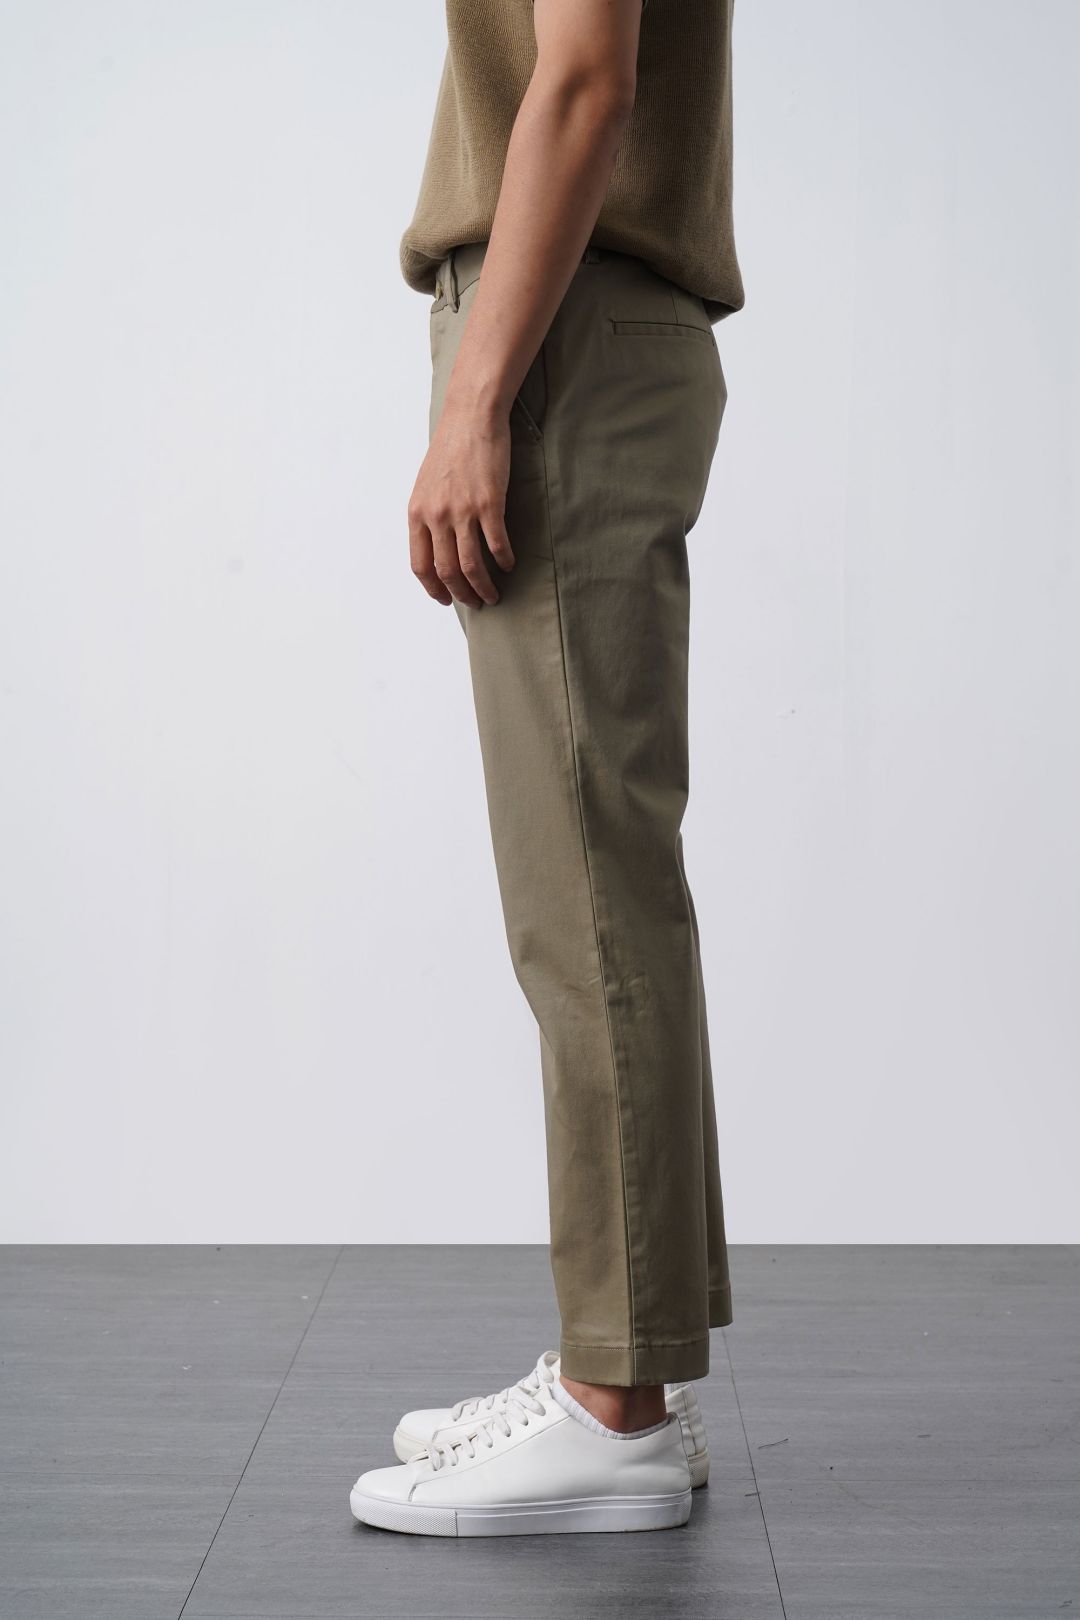 Plaid&Plain Men's Slim Fit Khaki Pants Stretch Cropped Chino Skinny Pants  130201 Black 28 at Amazon Men's Clothing store